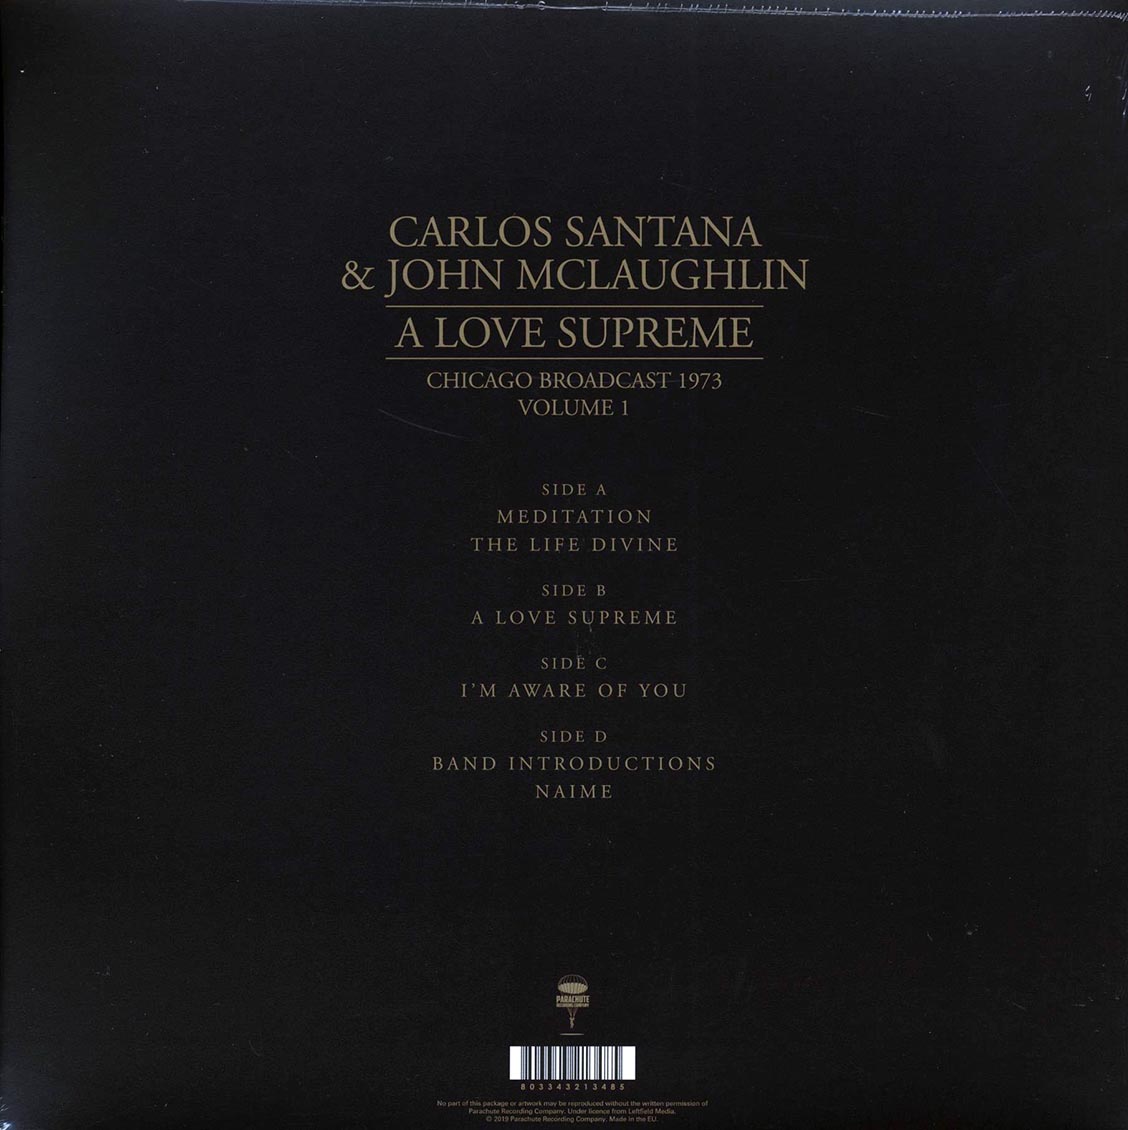 Carlos Santana, John McLaughlin - A Love Supreme Volume 1: Chicago Broadcast 1973 (2xLP) - Vinyl LP, LP